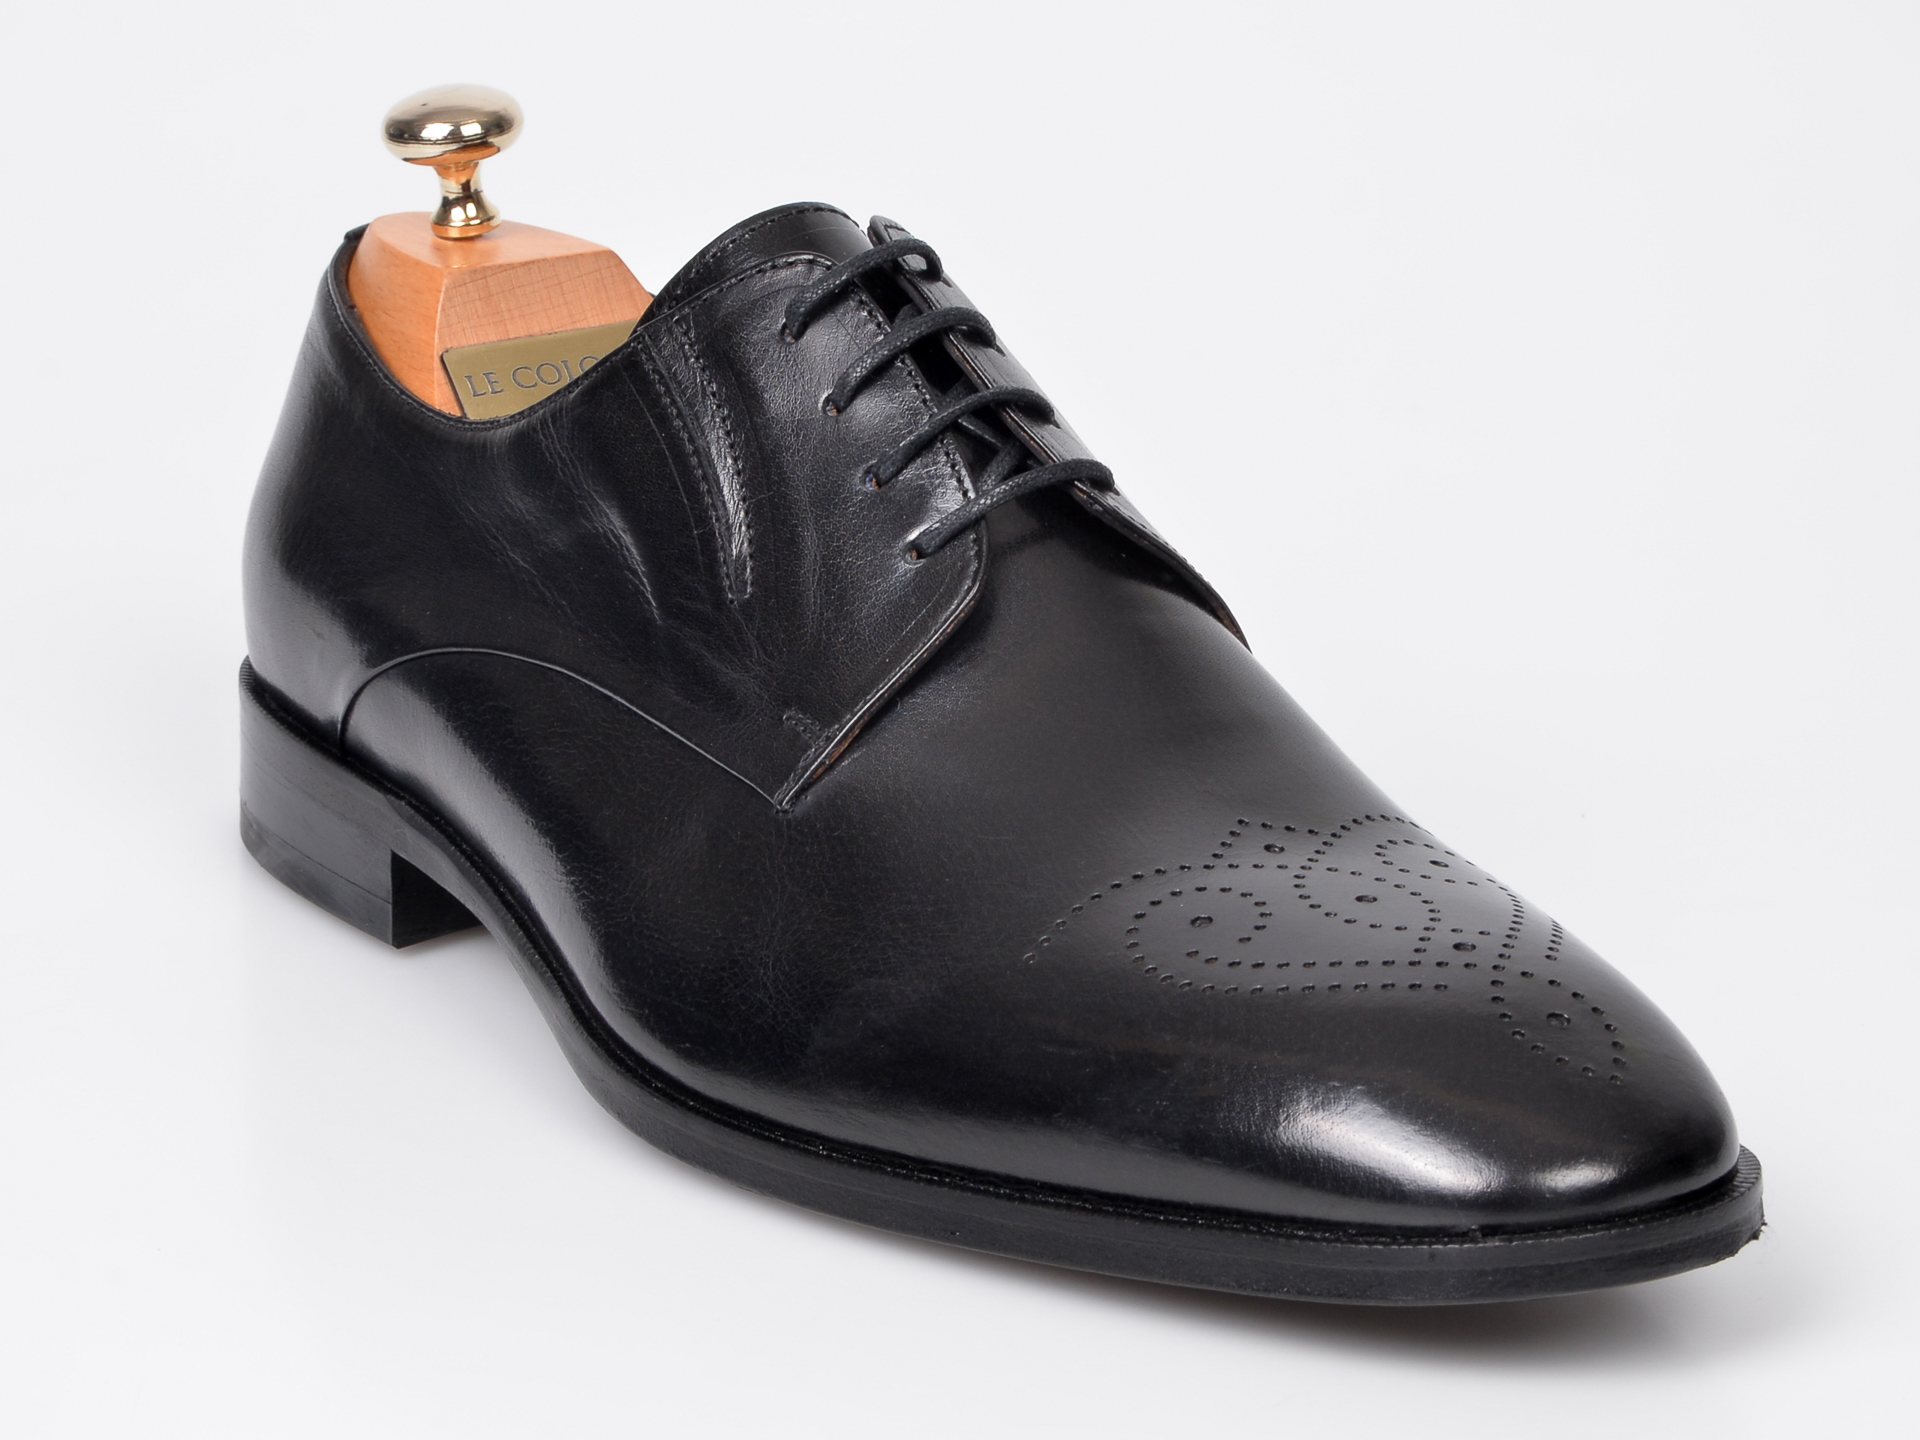 Pantofi LE COLONEL negri, 48730, din piele naturala